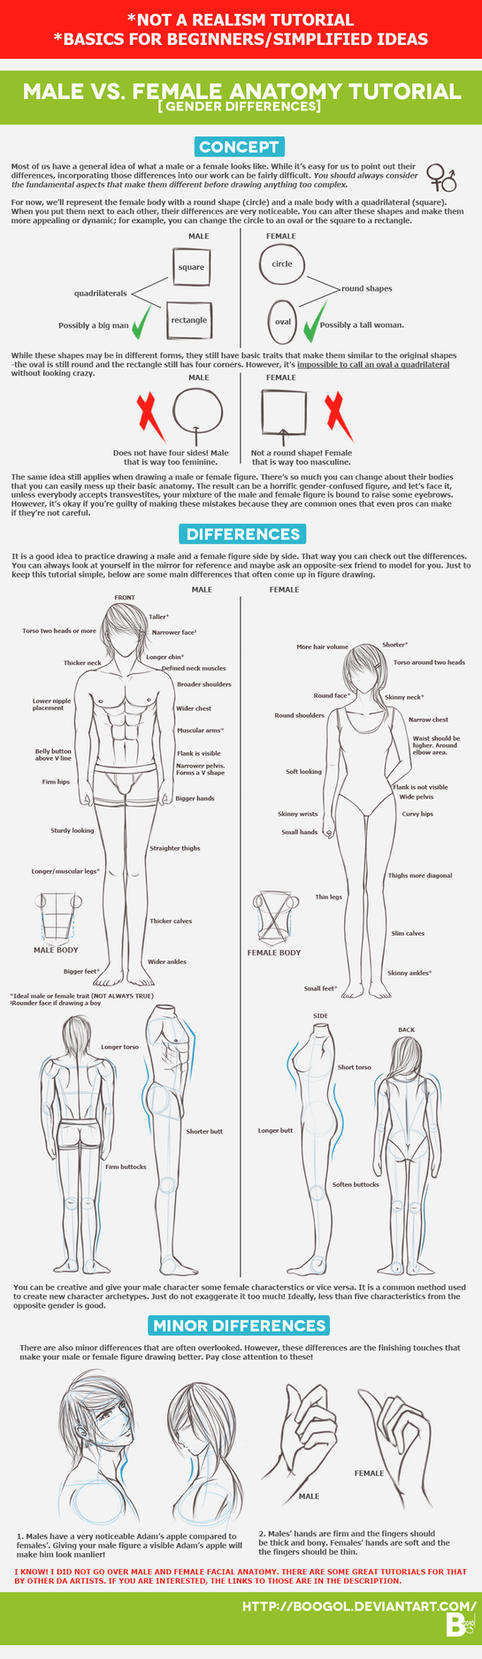 Male VS. Female Anatomy Tutorial by Boogol on DeviantArt